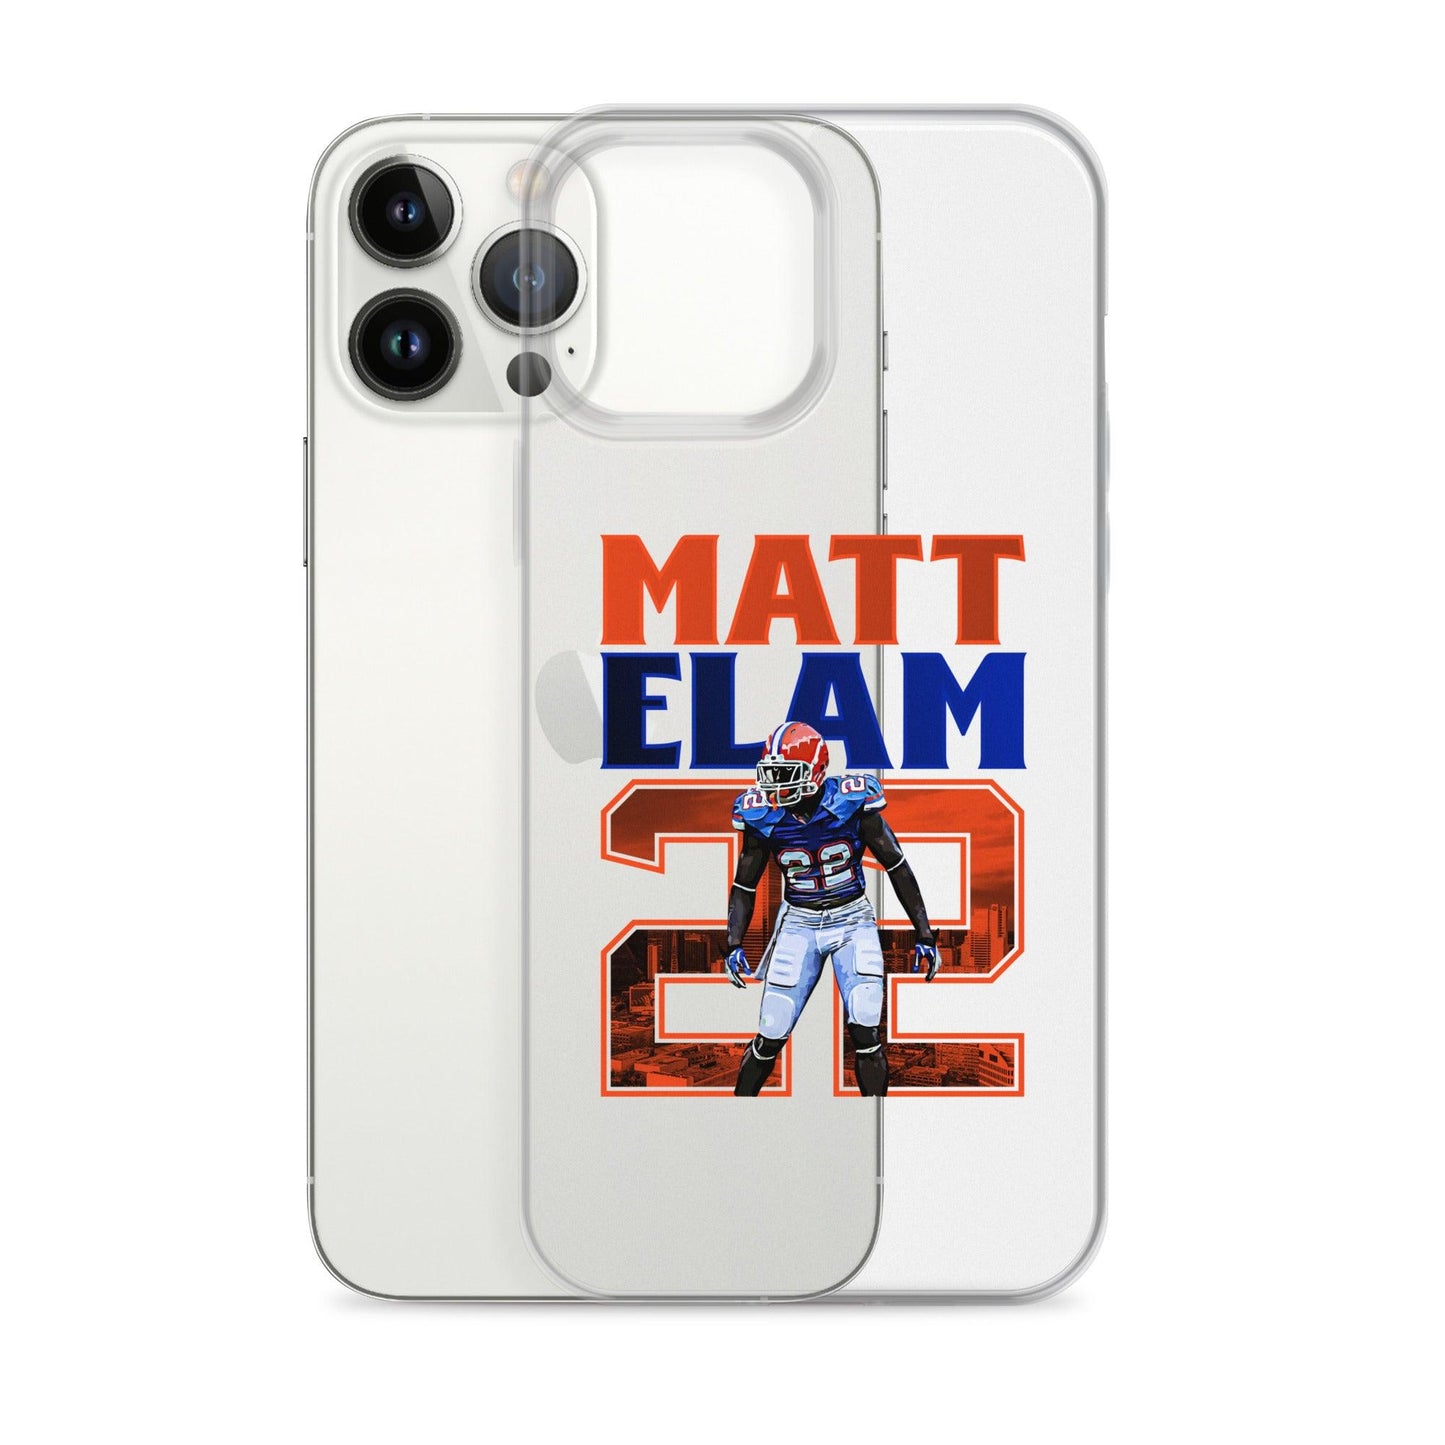 Matt Elam "Gameday" iPhone Case - Fan Arch